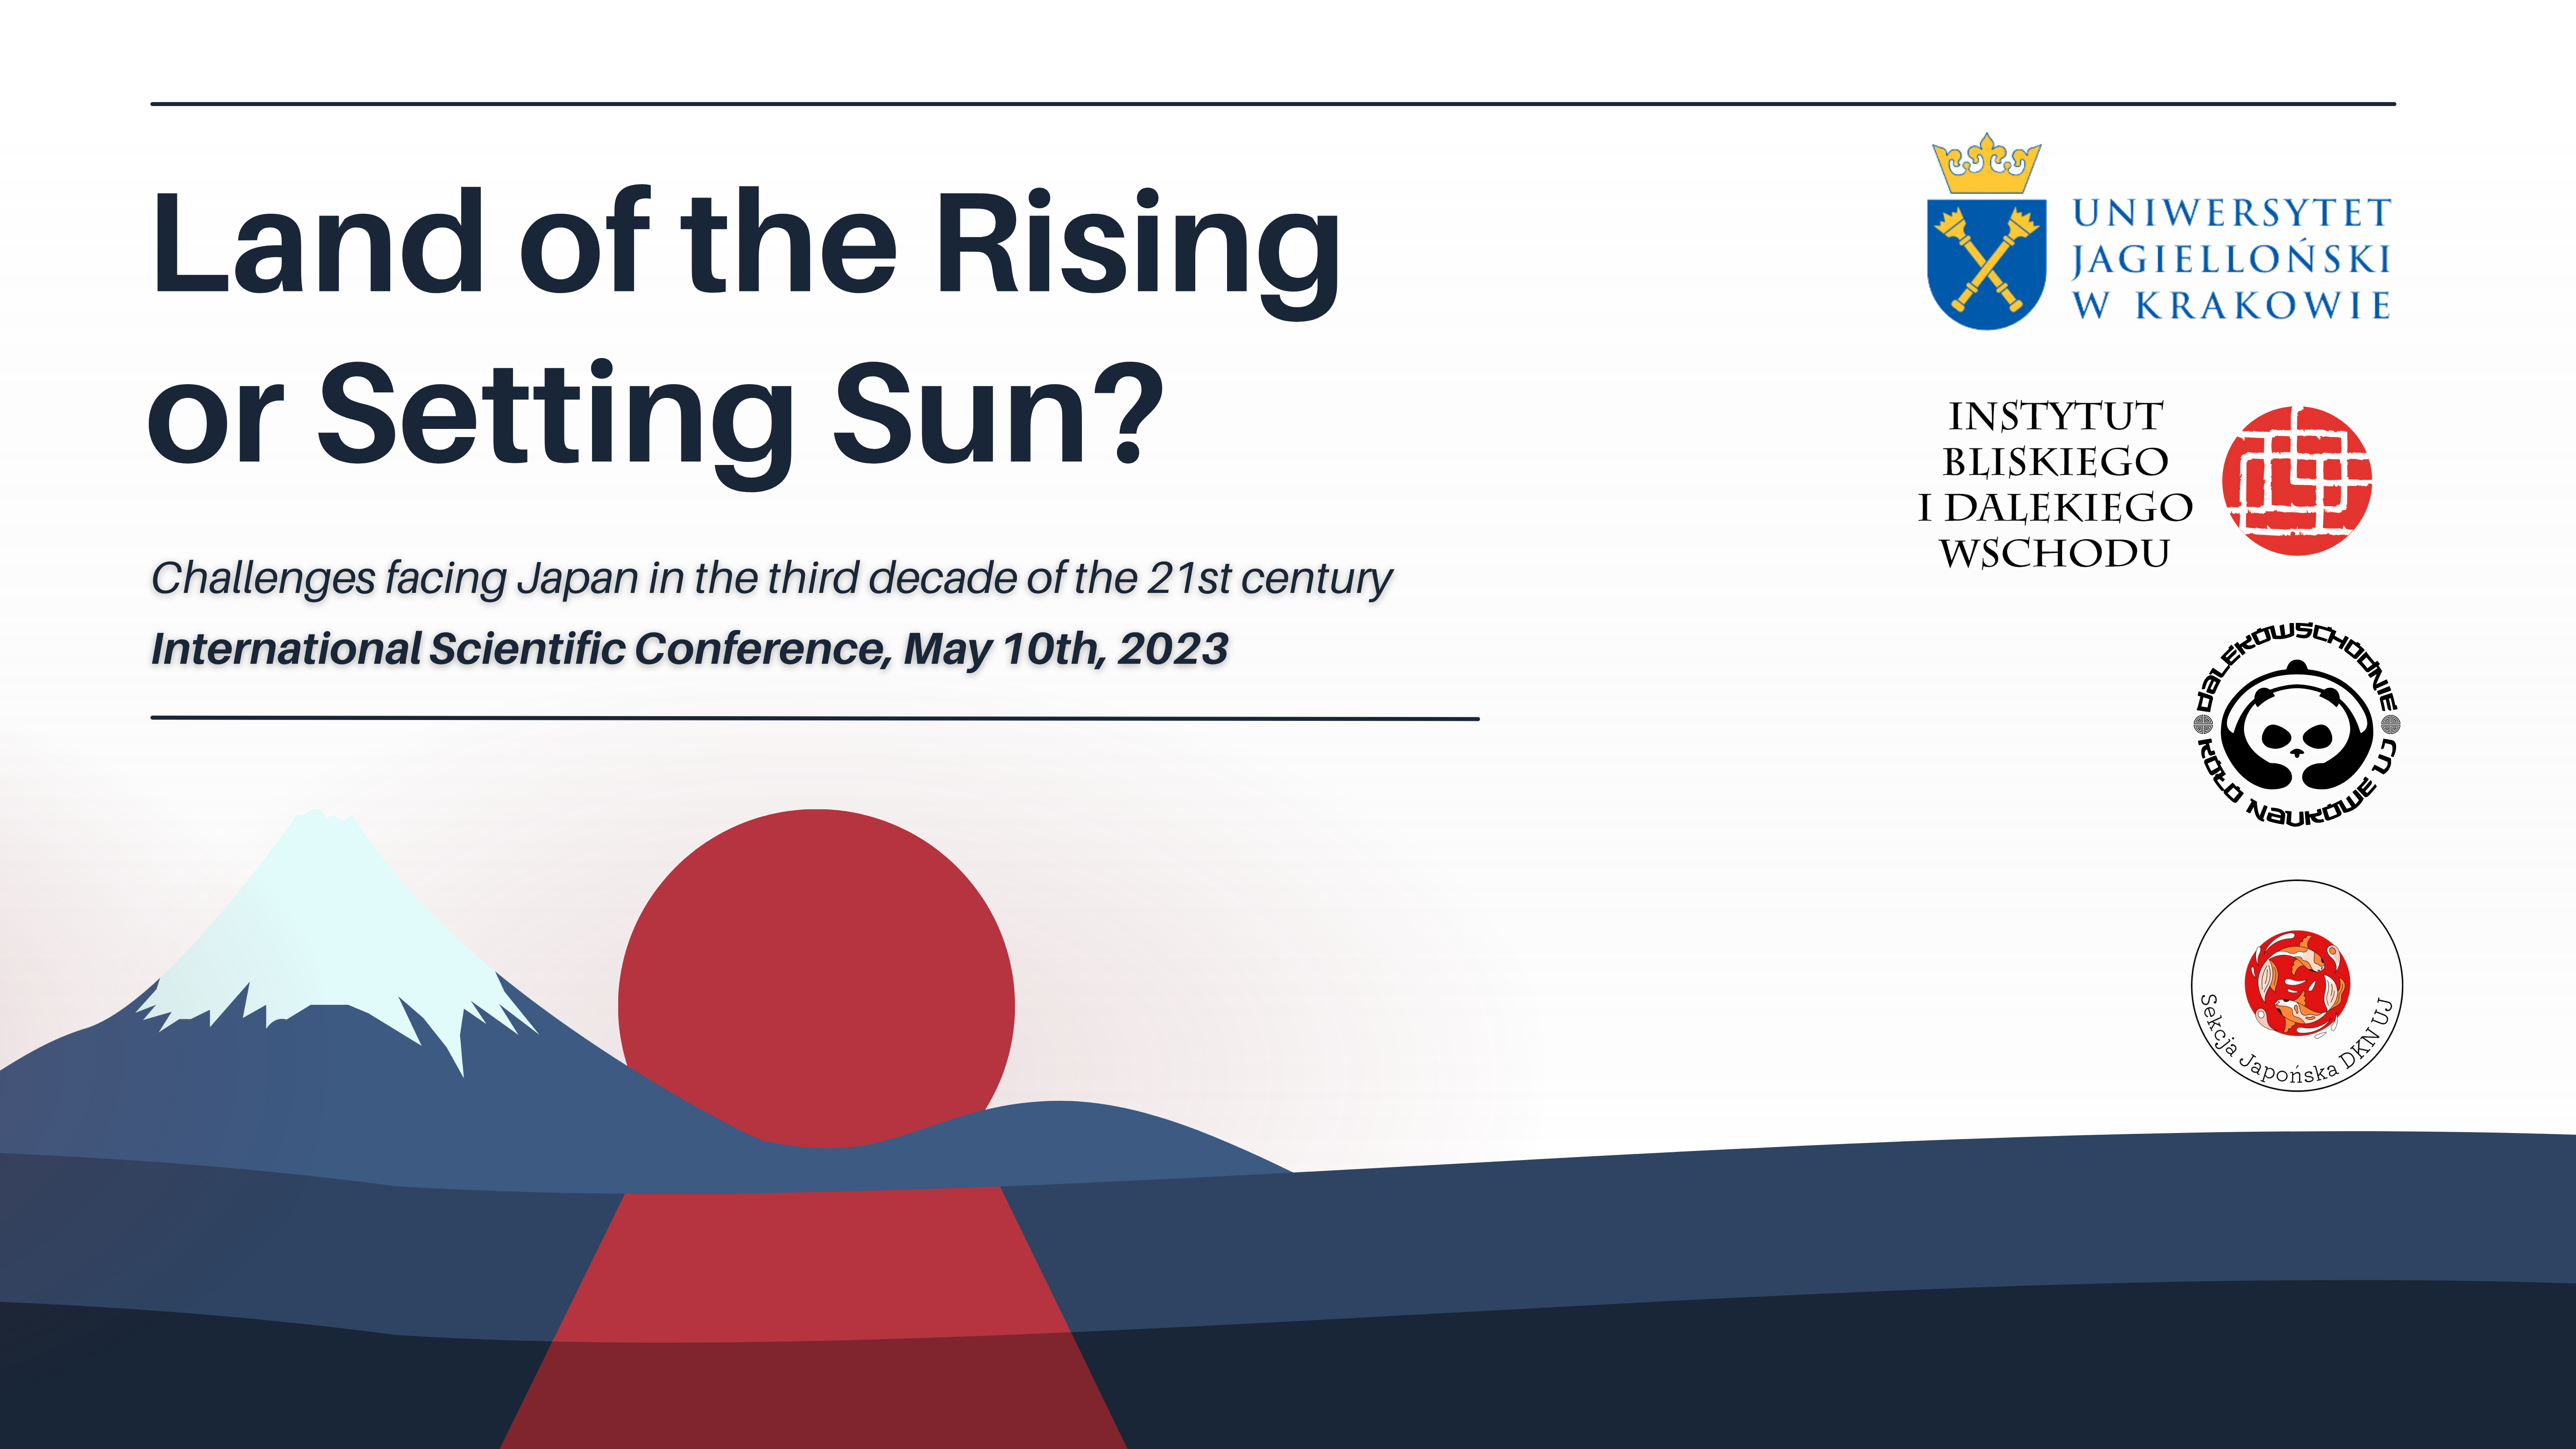 Międzynarodowa konferencja naukowa "Land of the Rising or Setting Sun” - 10.05.2023